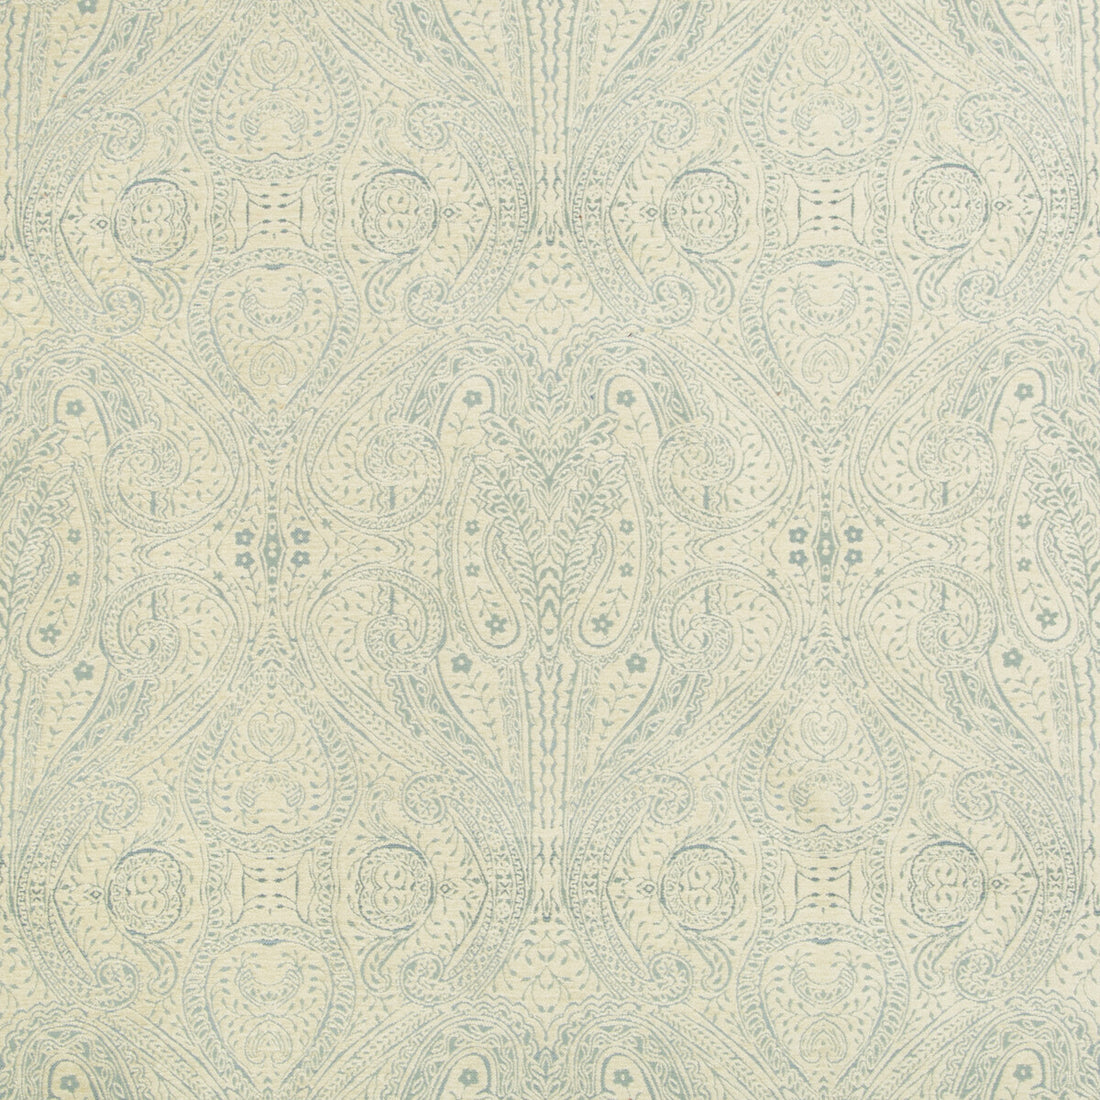 Kravet Design fabric in 34720-1615 color - pattern 34720.1615.0 - by Kravet Design in the Gis collection